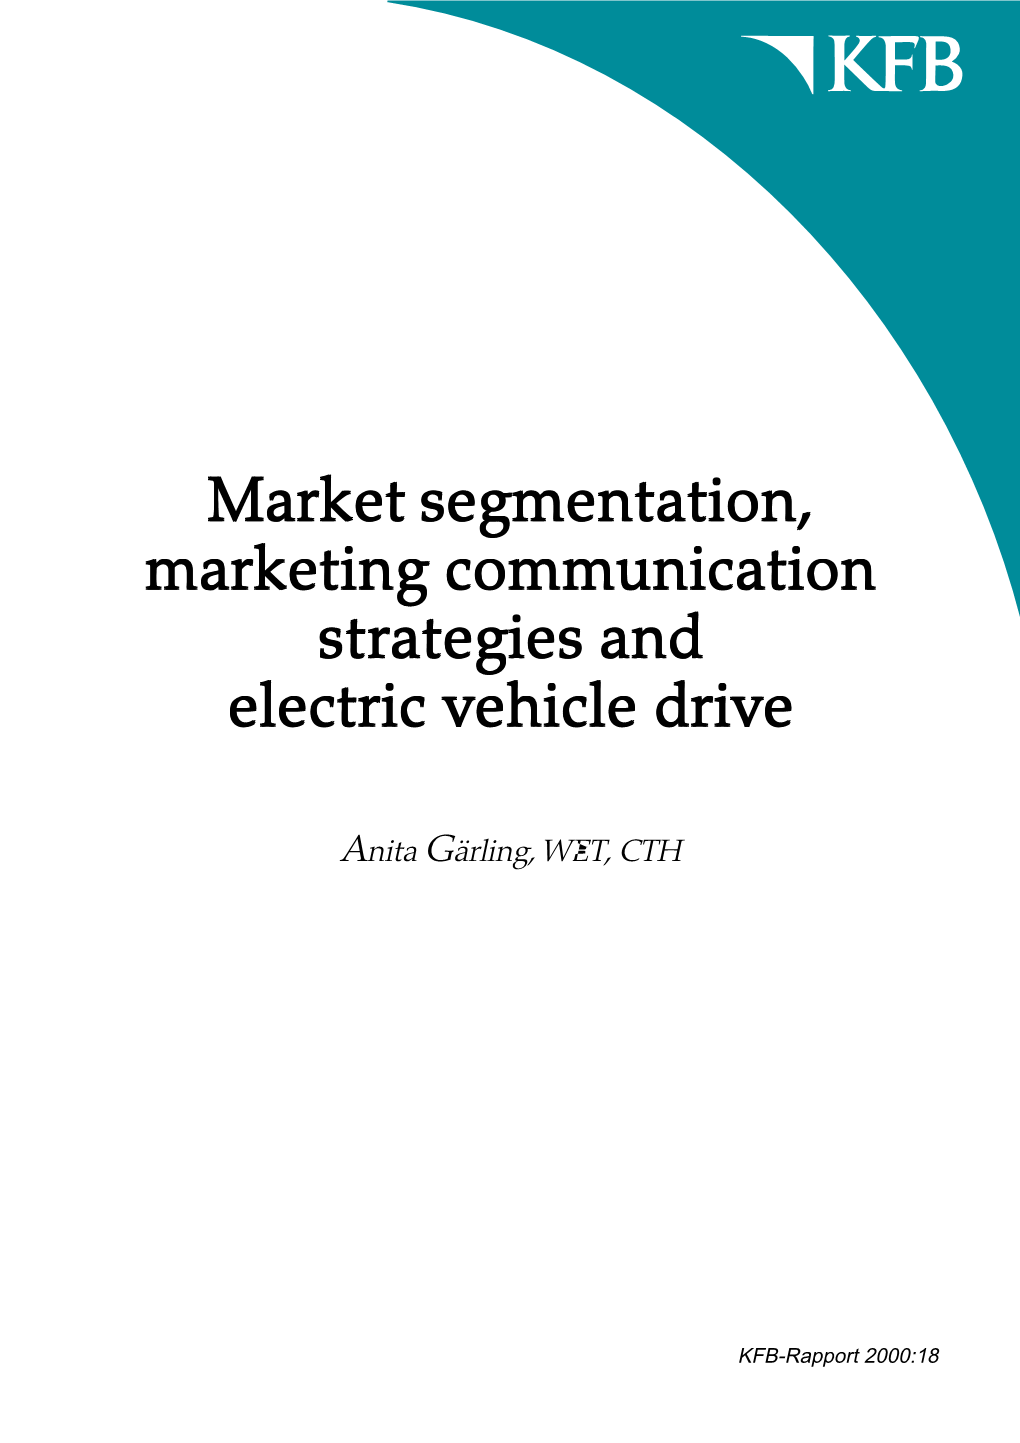 Market Segmentation, Marketing Communication Strategies and Electric Vehicle Drive